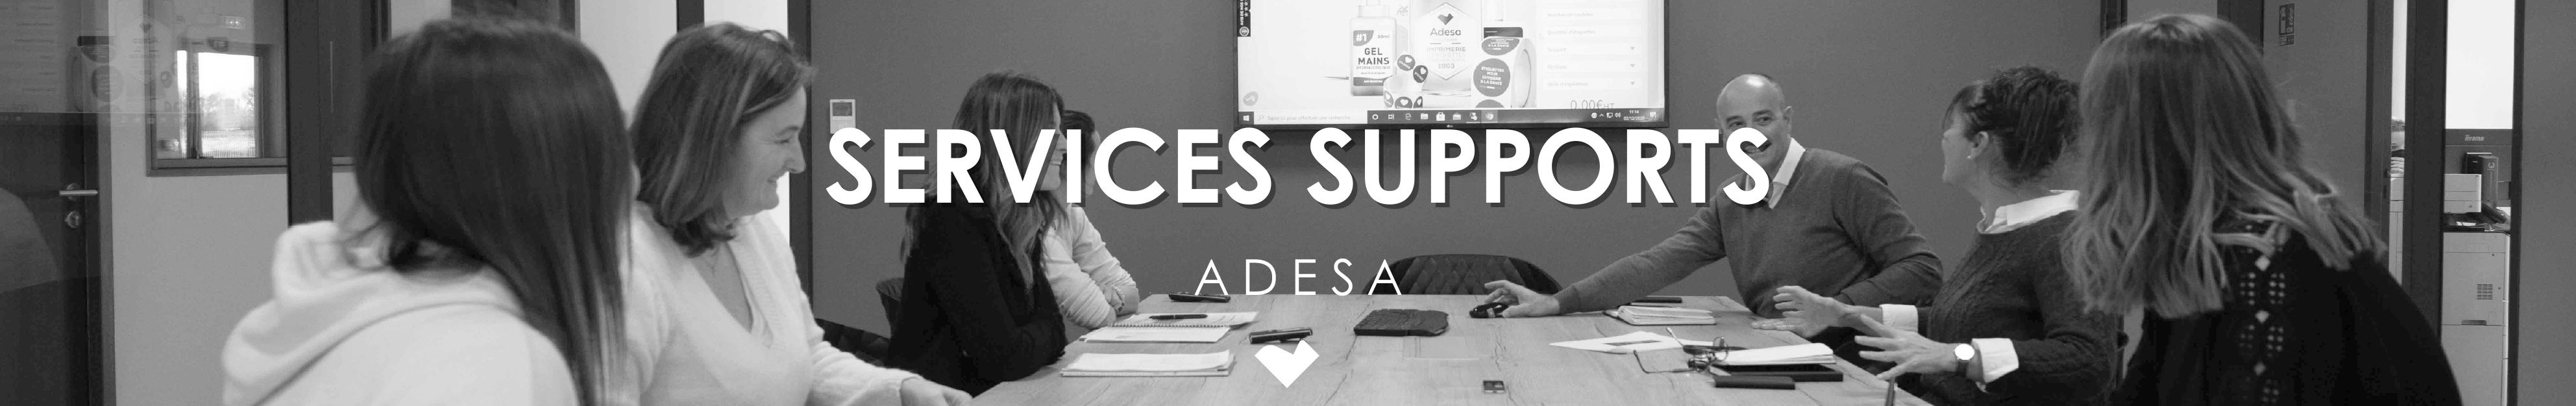 Adesa recrutement services supports